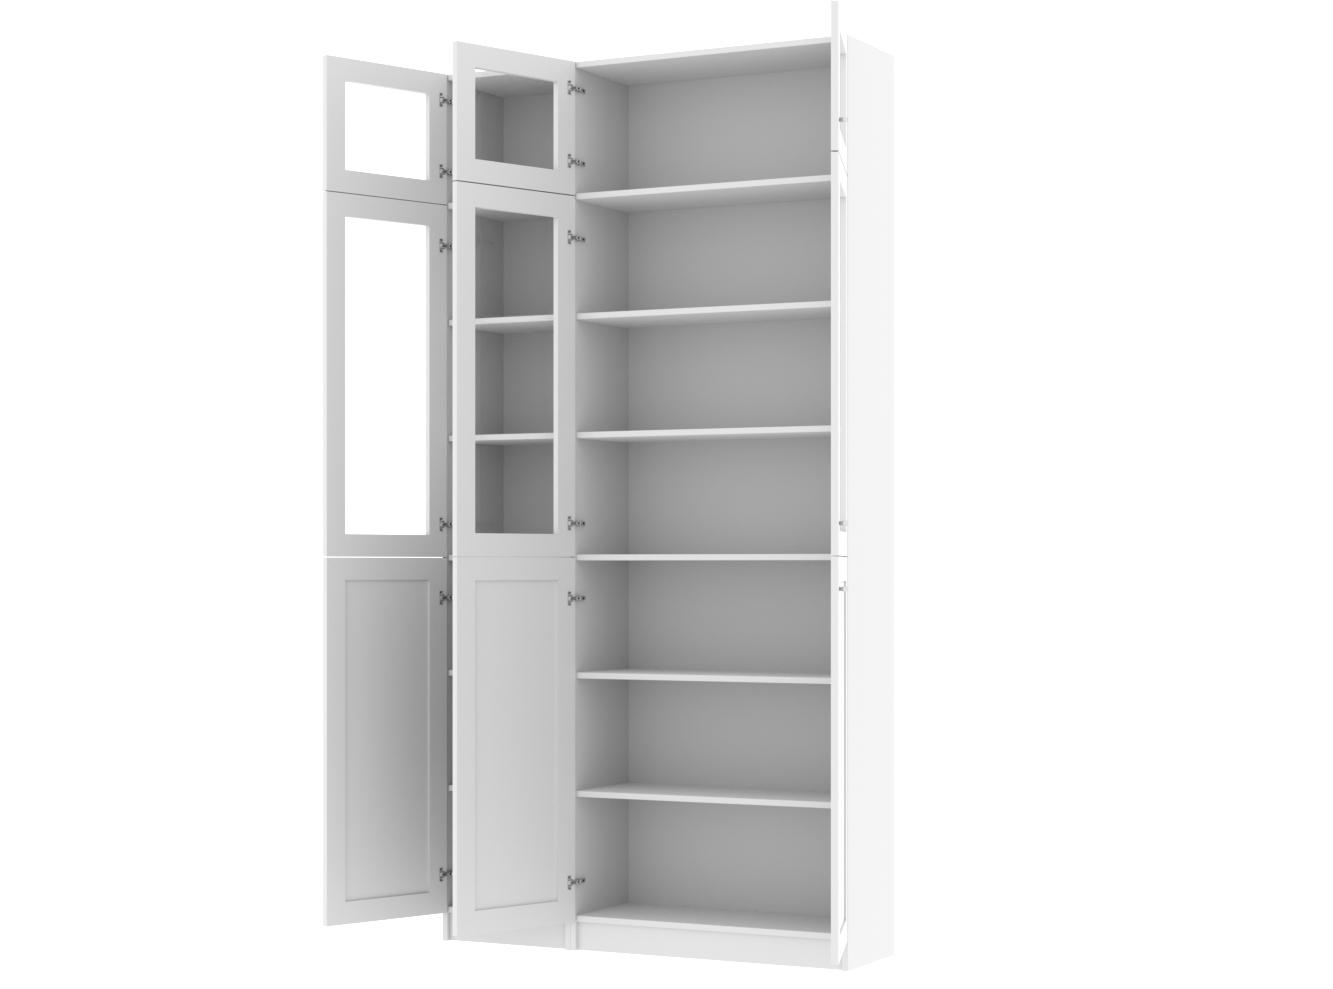  Книжный шкаф Билли 38 white ИКЕА (IKEA) изображение товара